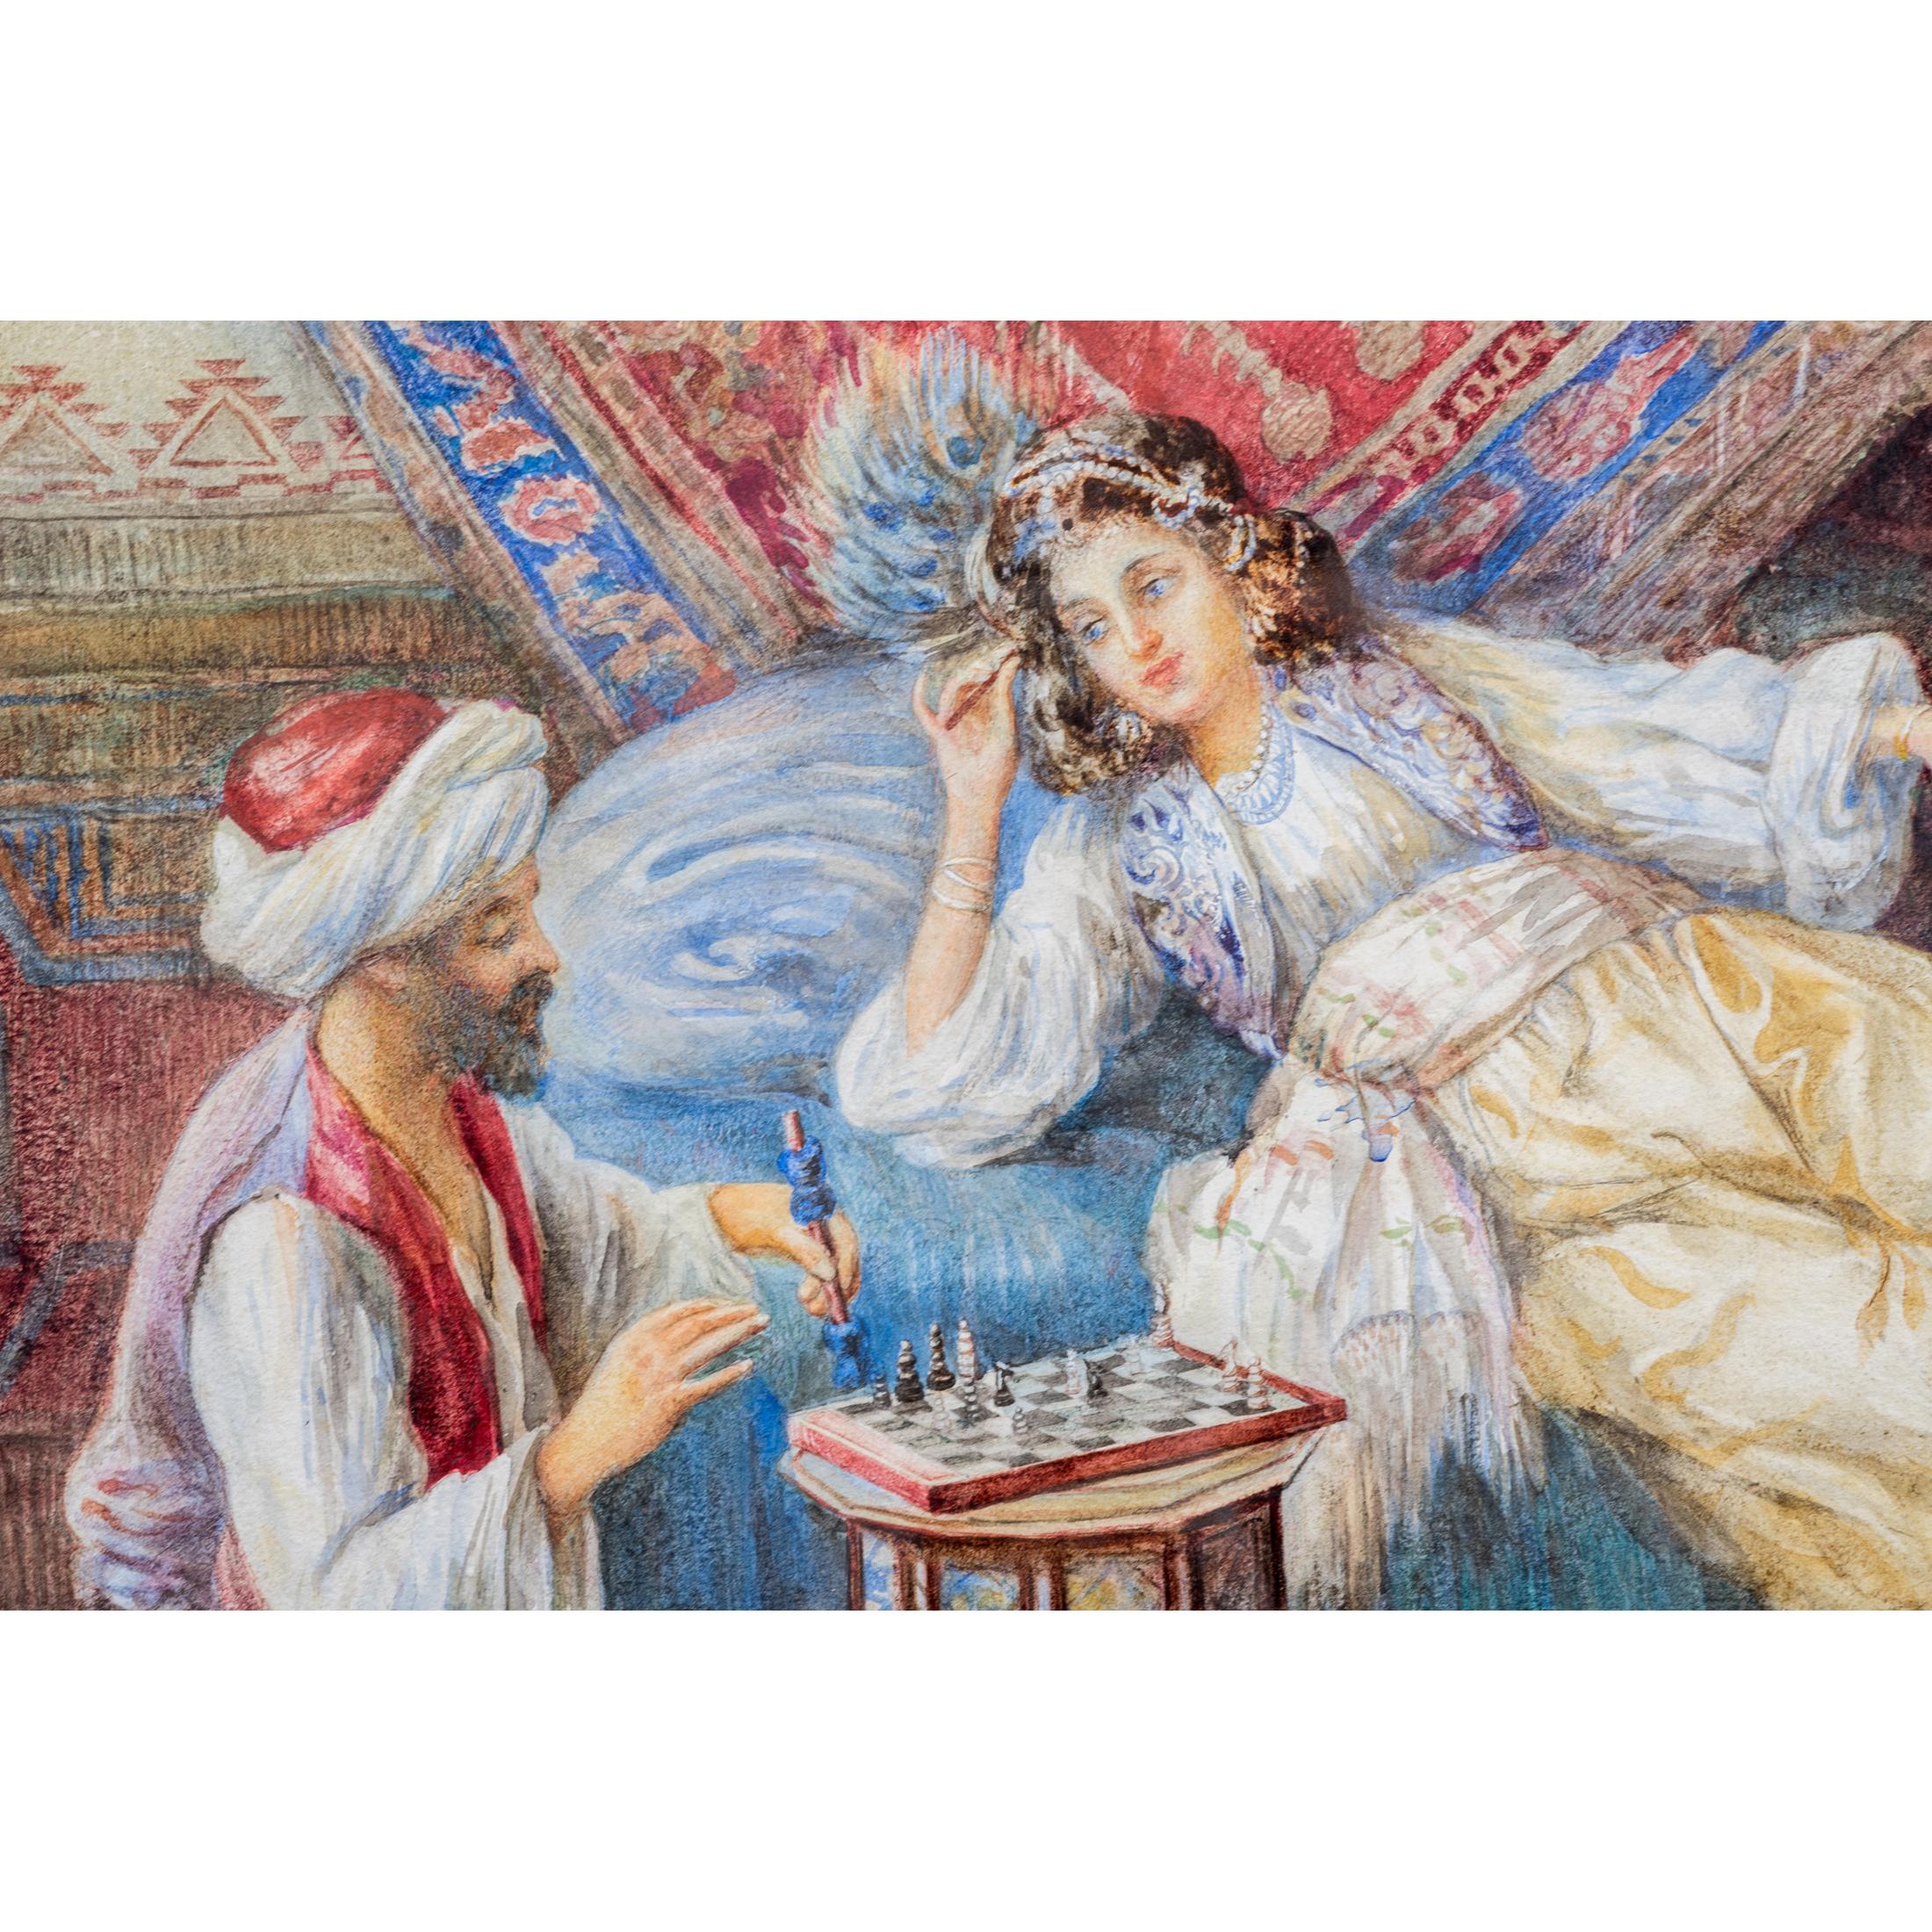 Title: The Chess Game
Artist: Umberto Cacciarelli (1880-1910)
Origin: Italian
Medium: Watercolour
Dimension: image: 25 1/2 in. x 19 1/2 in.; frame: 29 1/2 in. x 23 1/4 in.